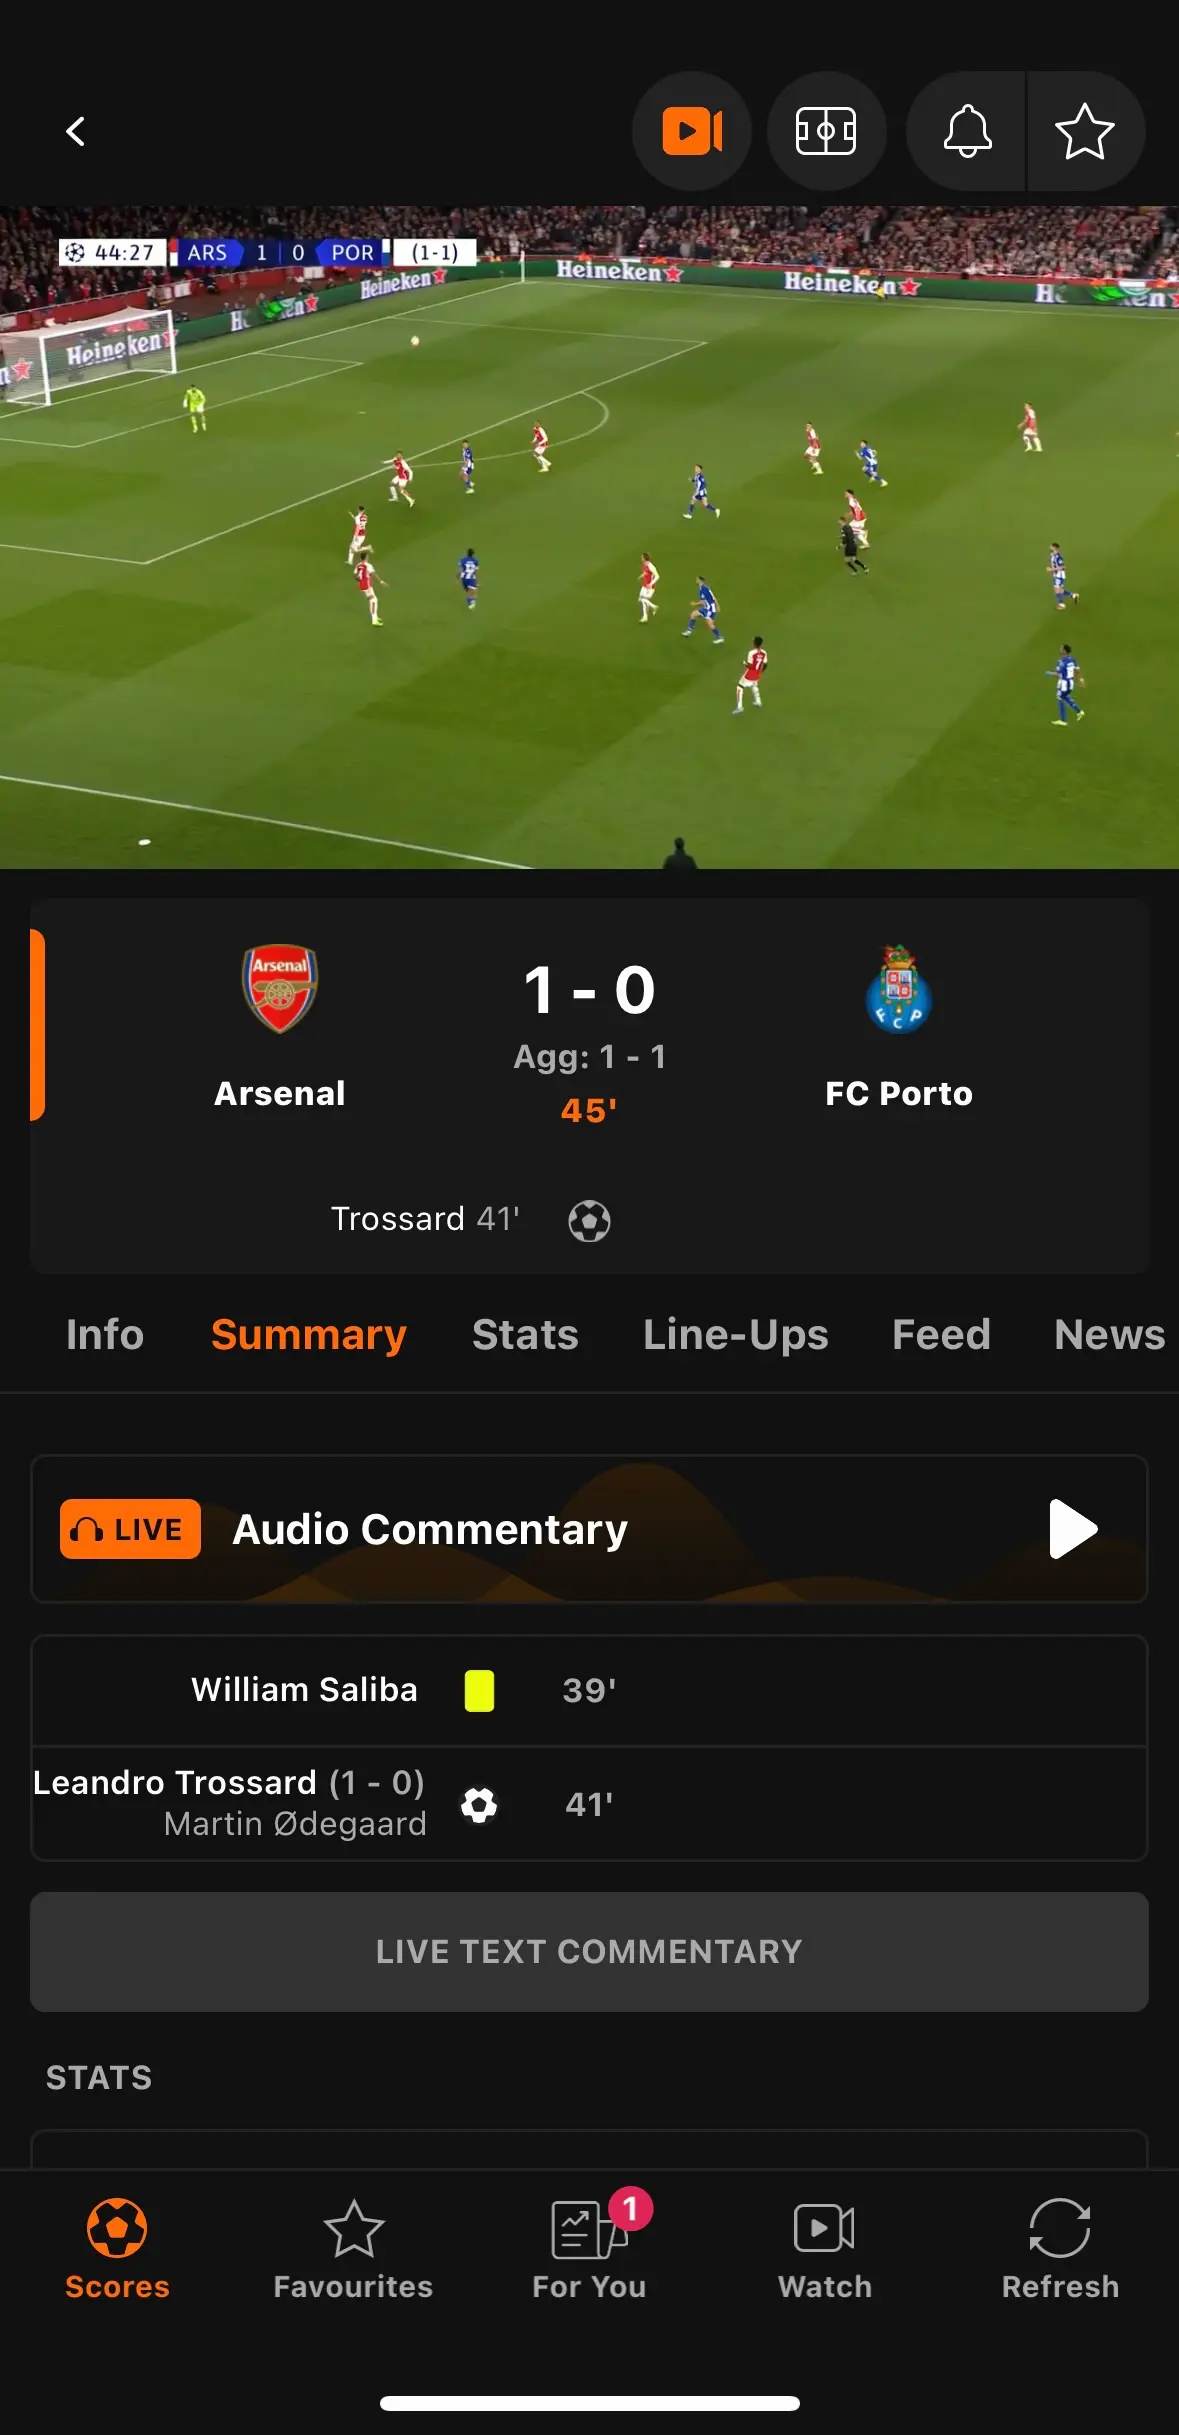 Stream du match Arsenal vs Porto de l'UCL via l'appli iOS de LiveScore 